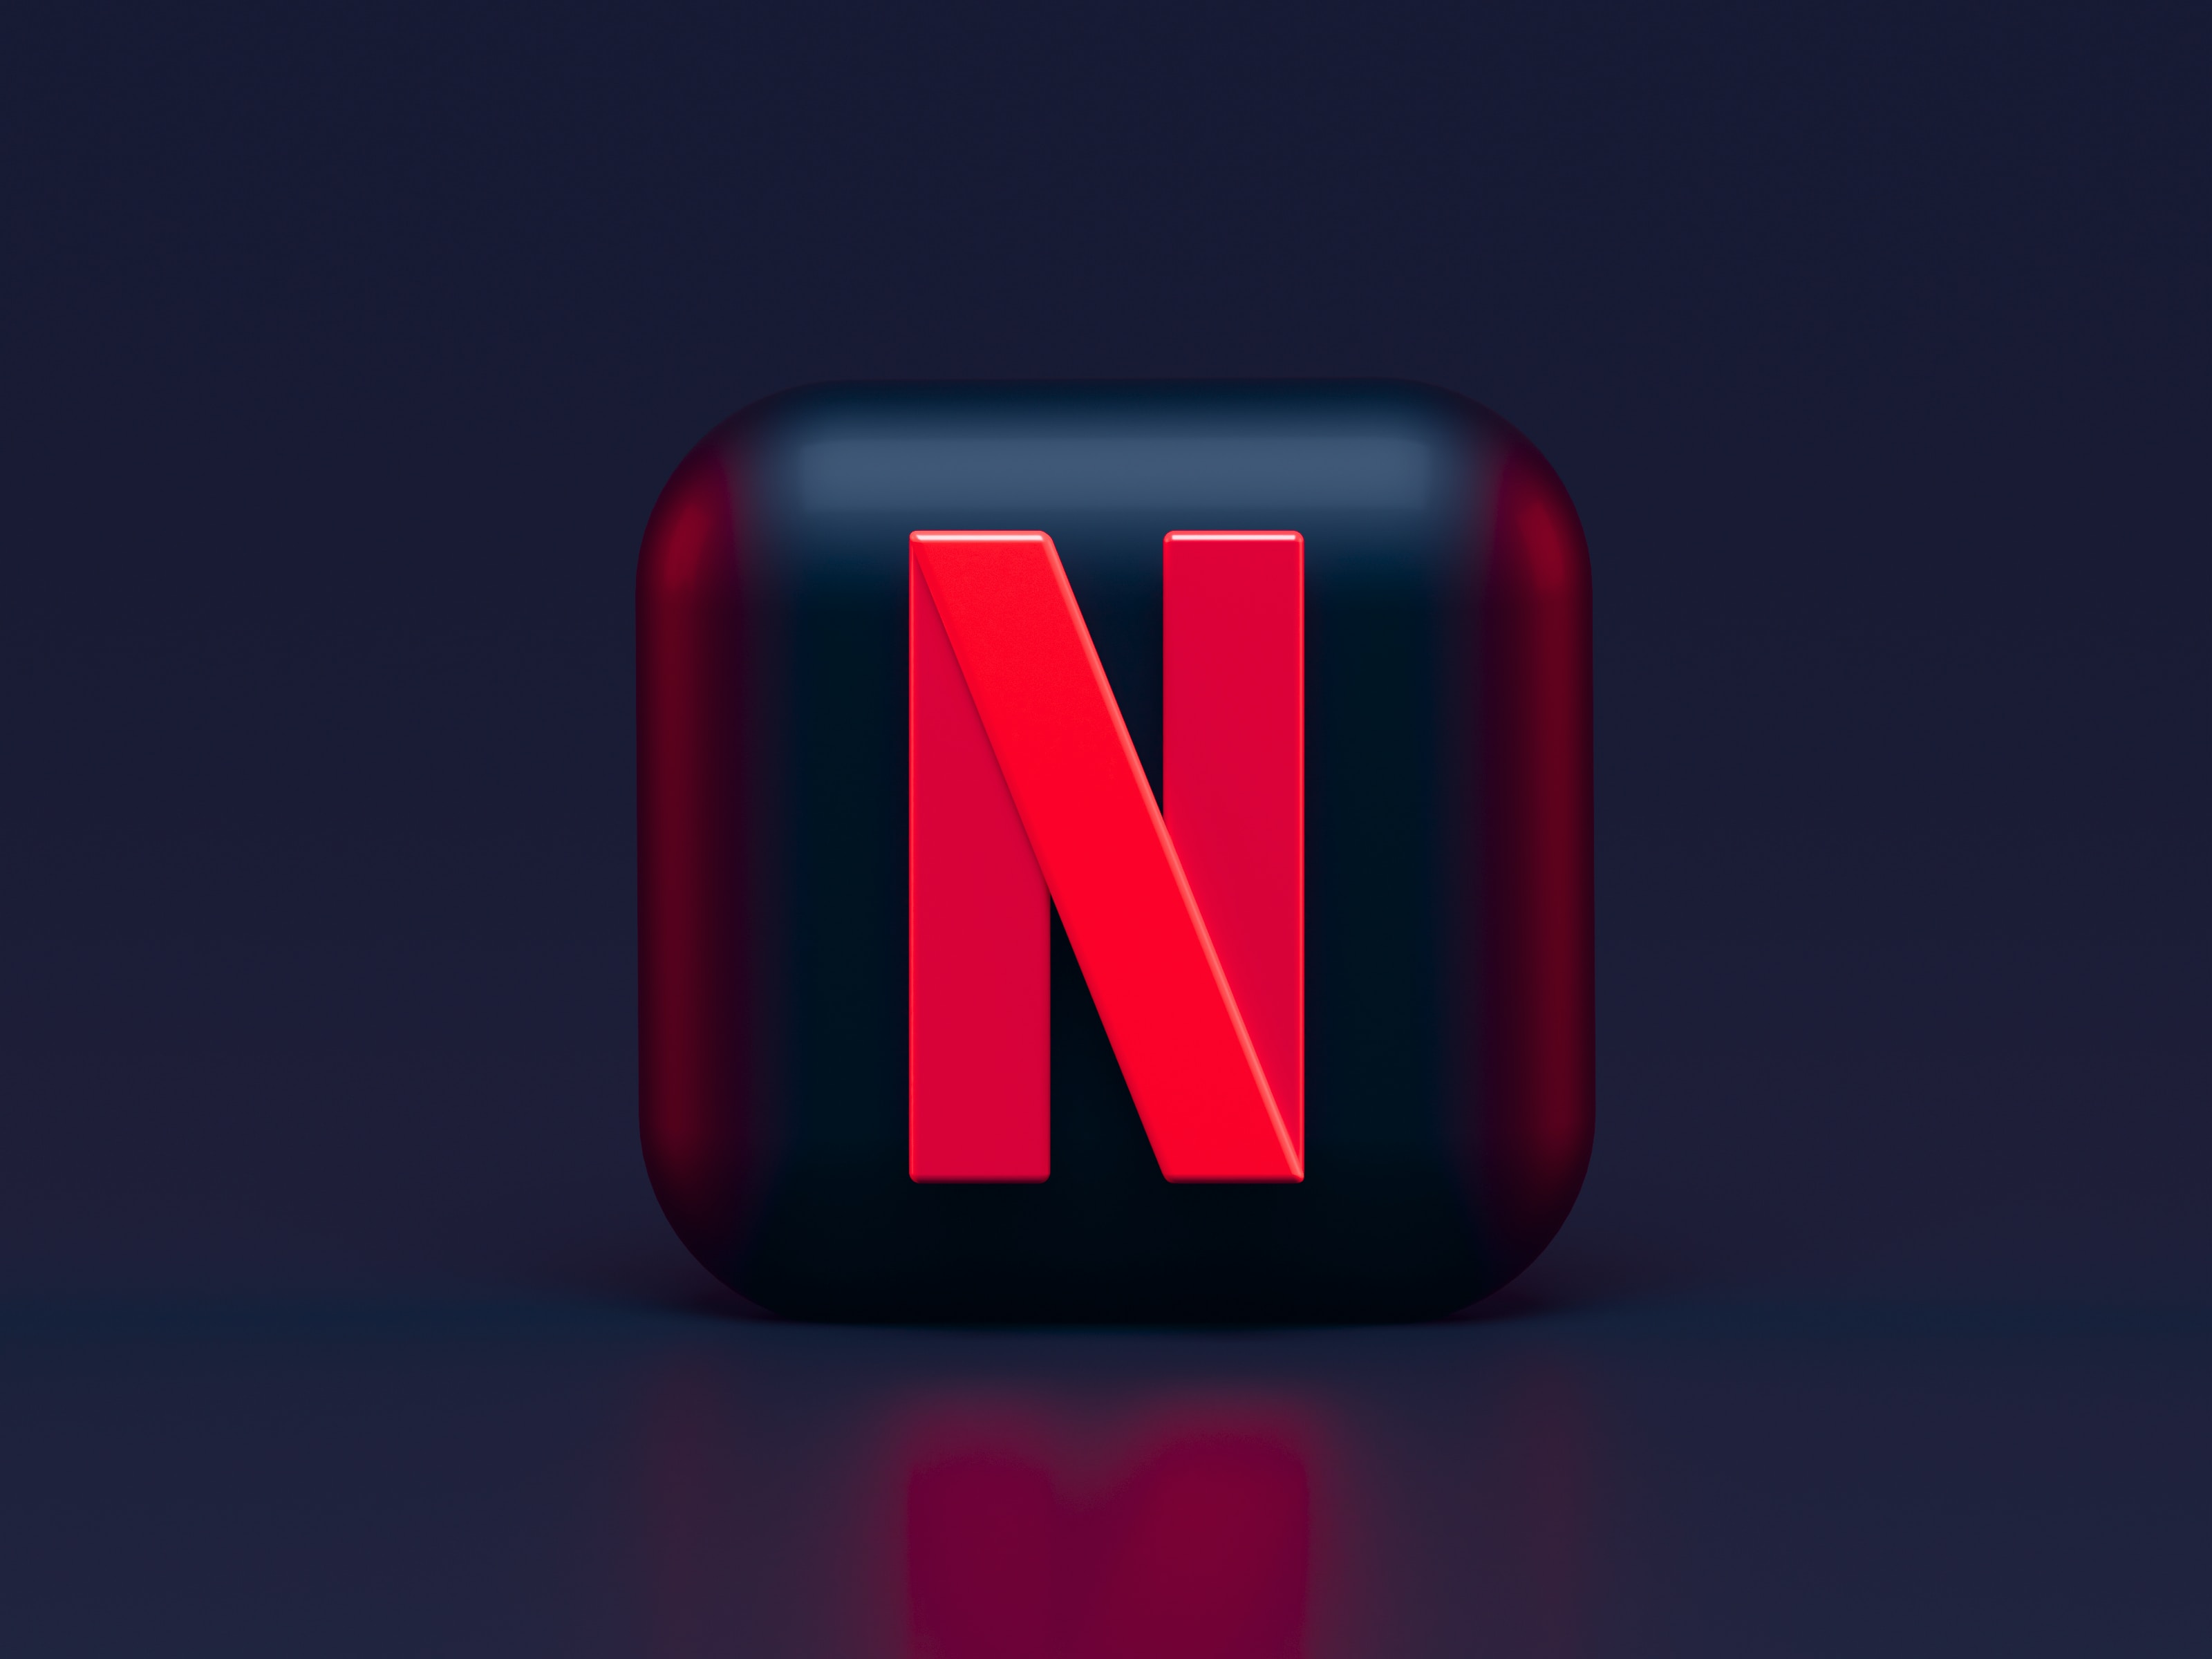 Netflix stock experience growth